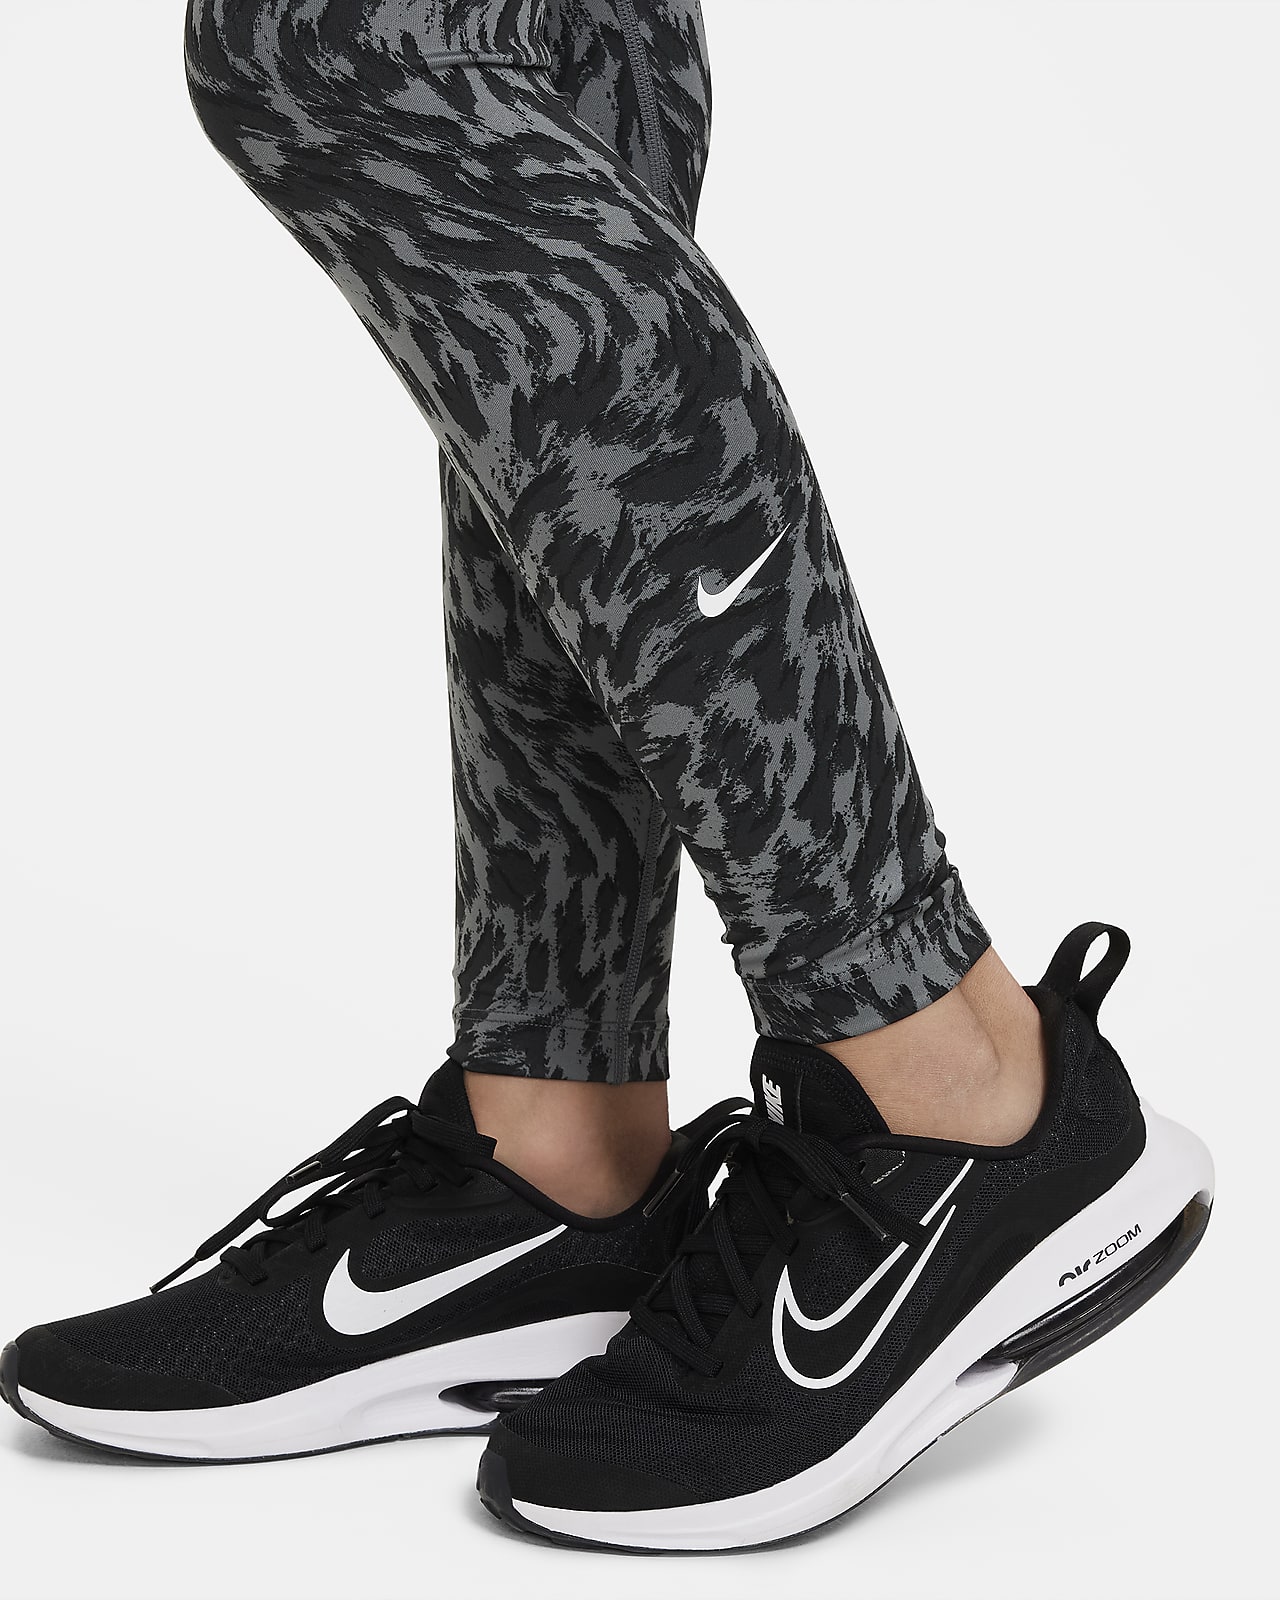 Grey Running Tights. Nike ID